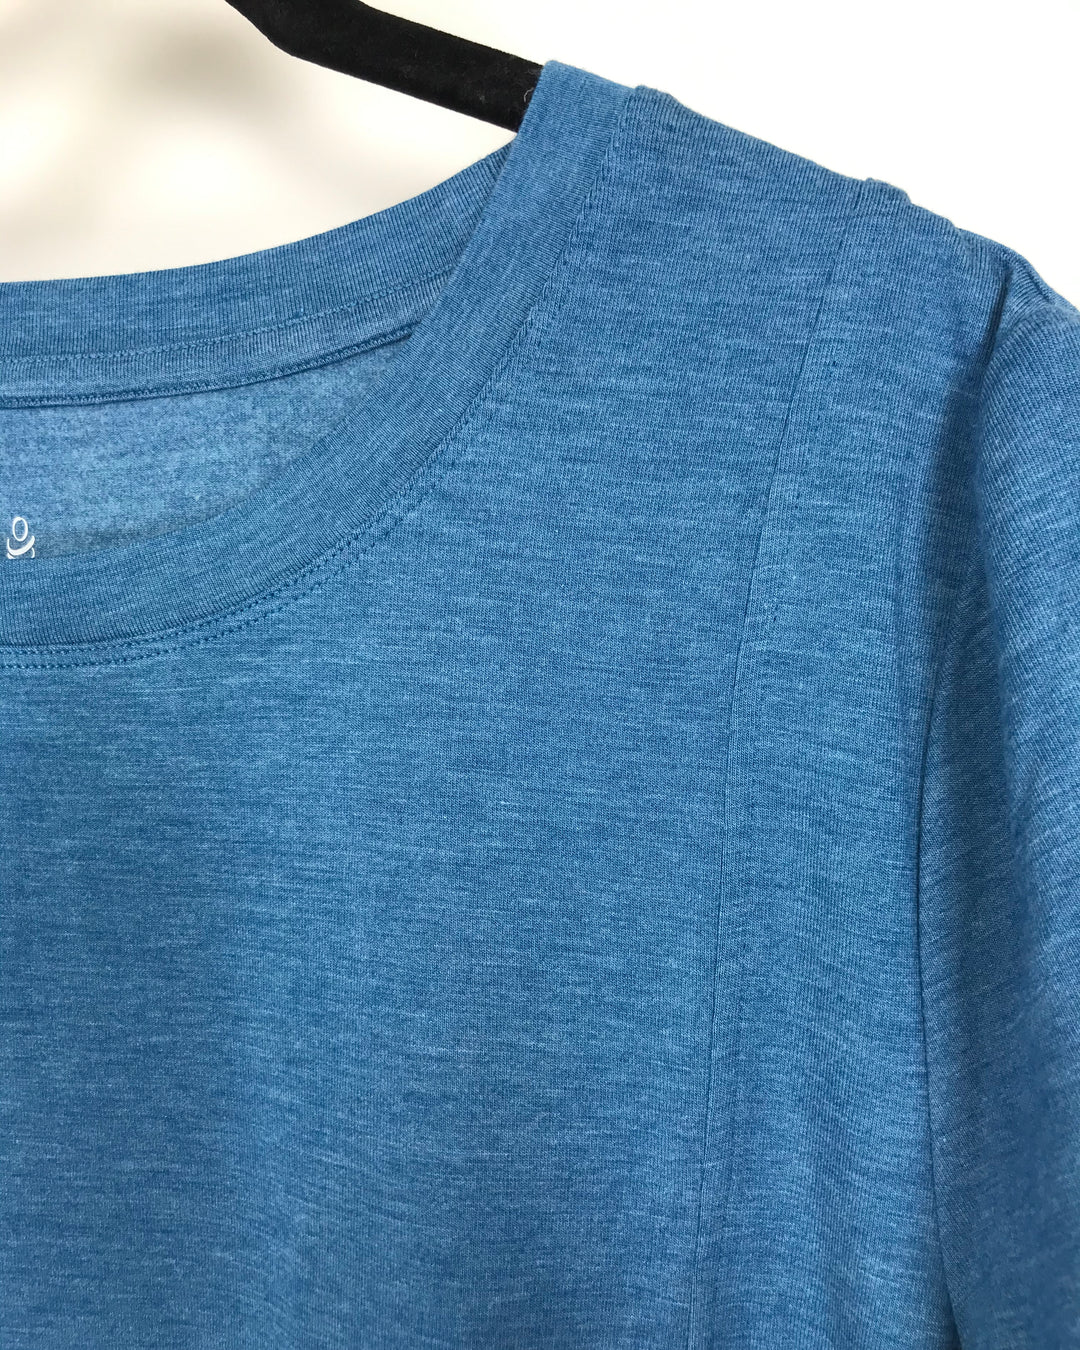 Blue Short Sleeve Top - Small and Medium